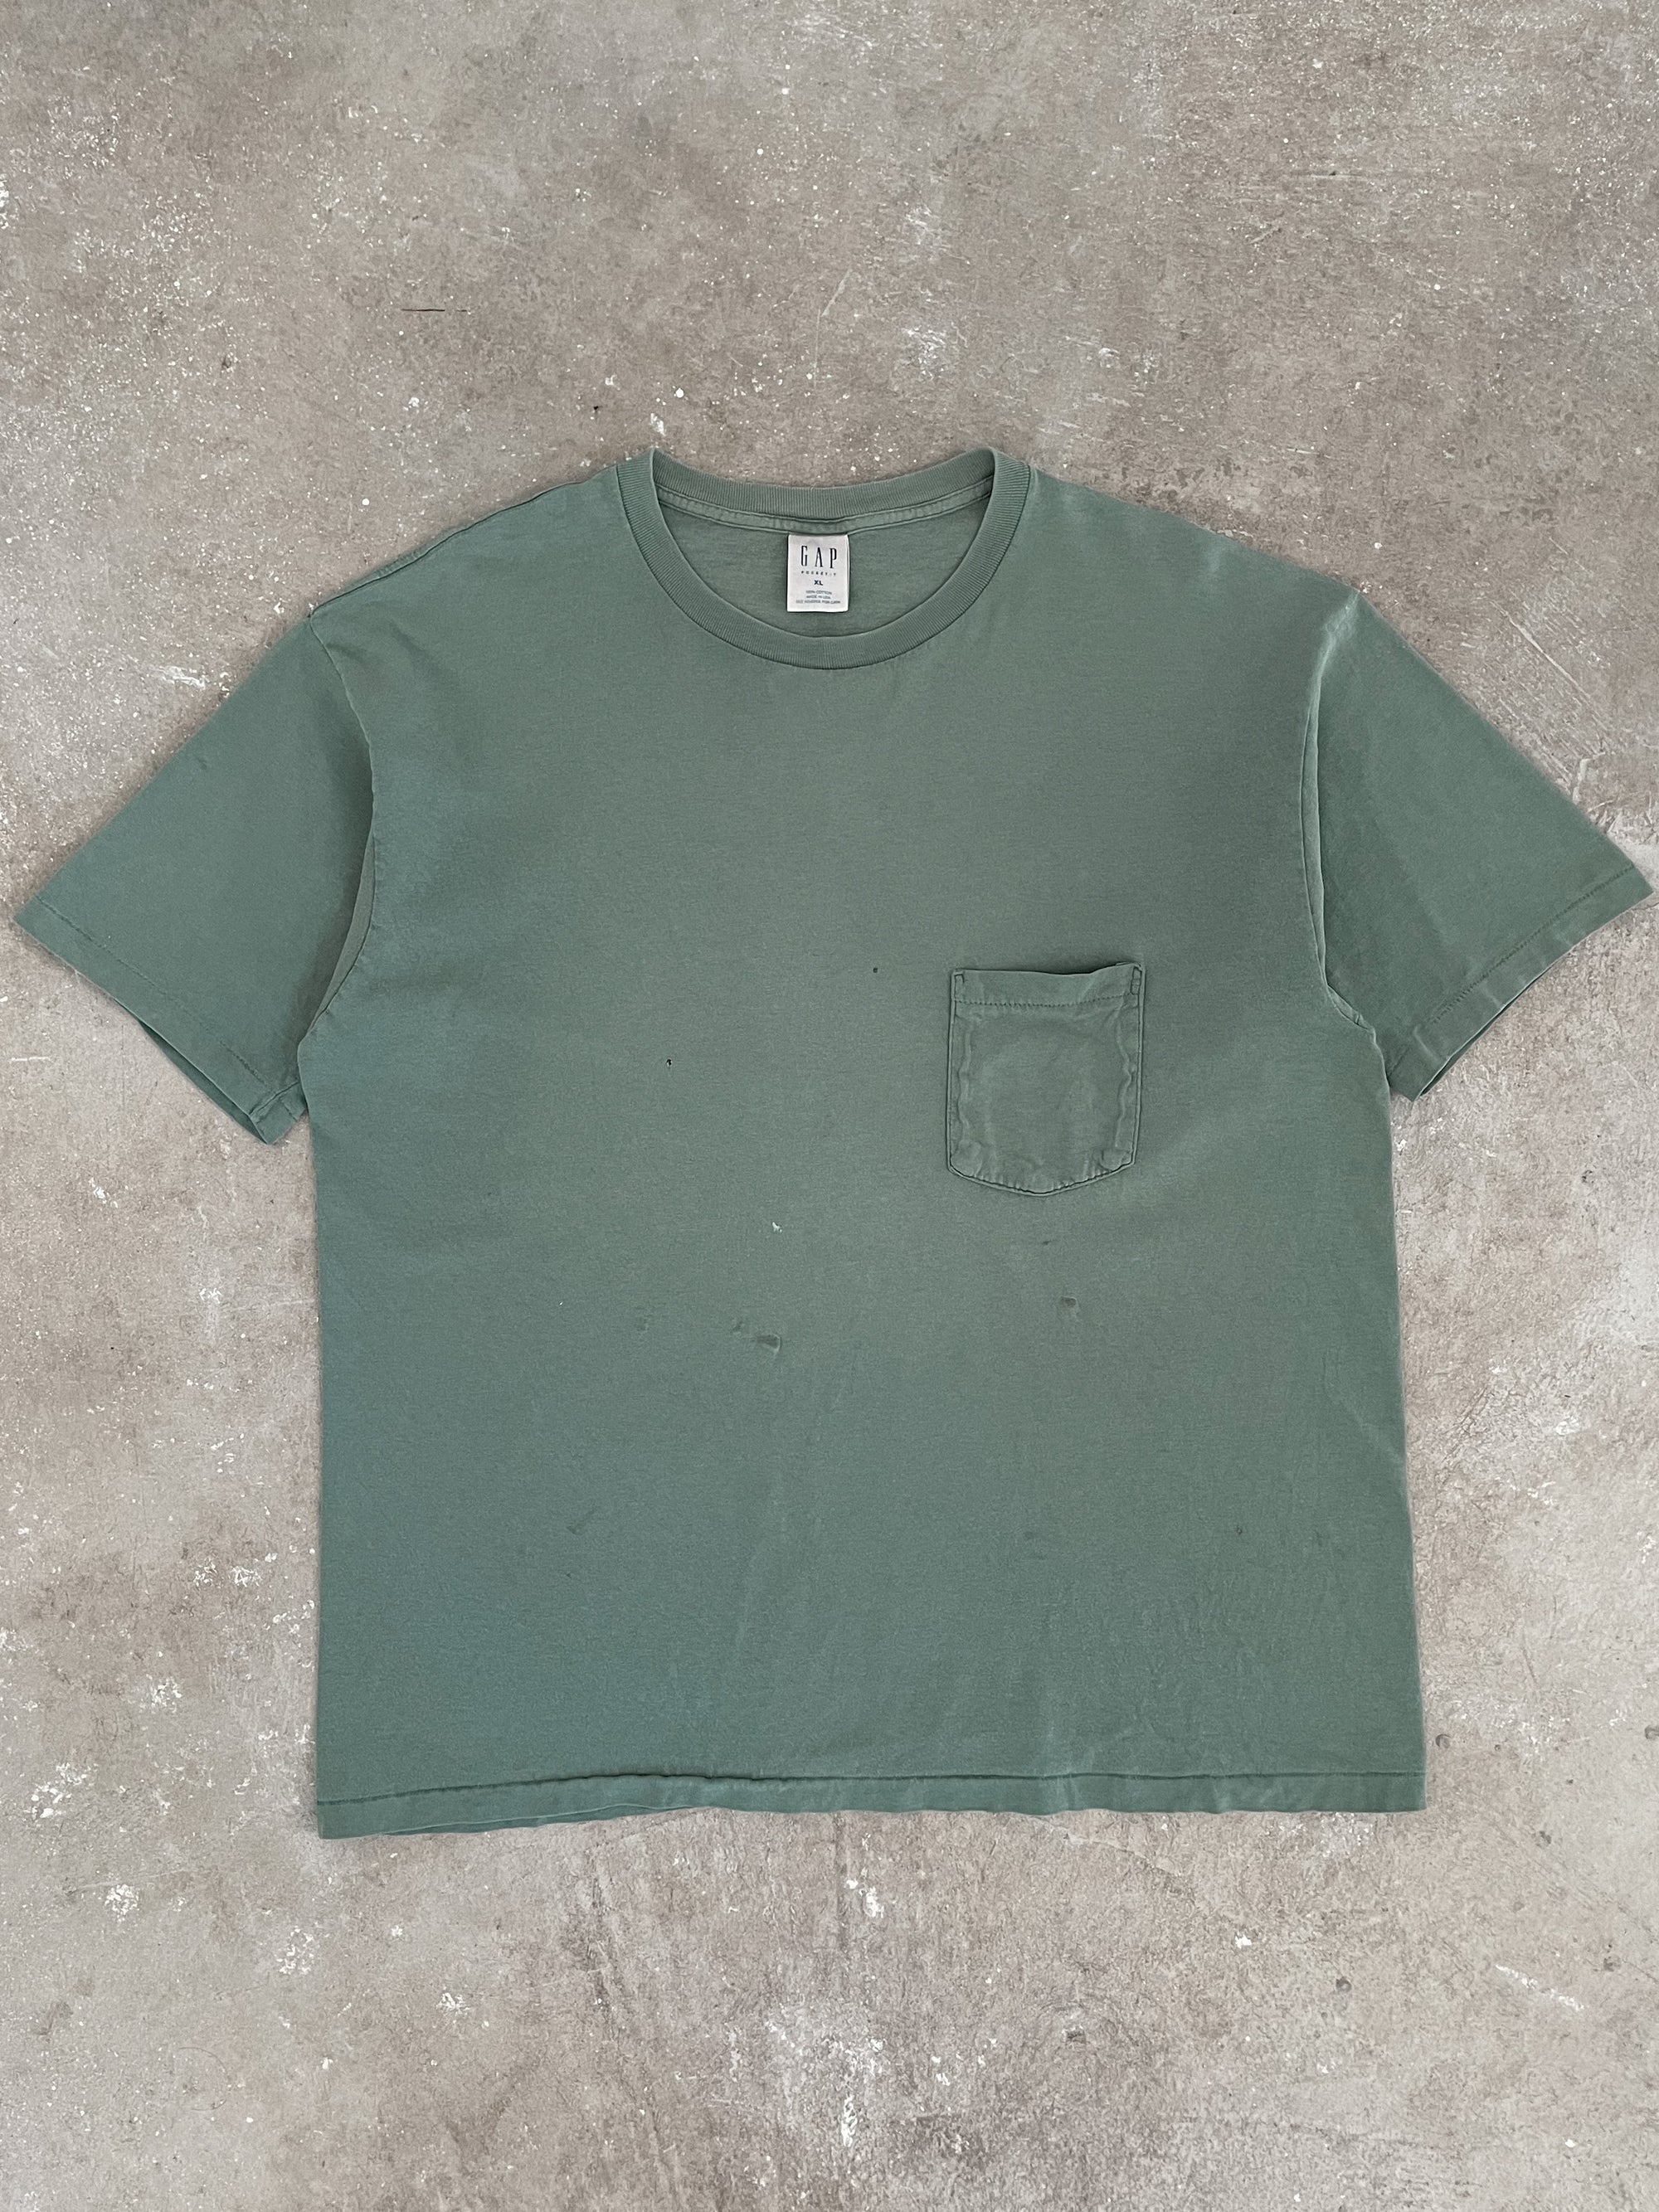 1990s Gap Faded Green Pocket Tee (XL)